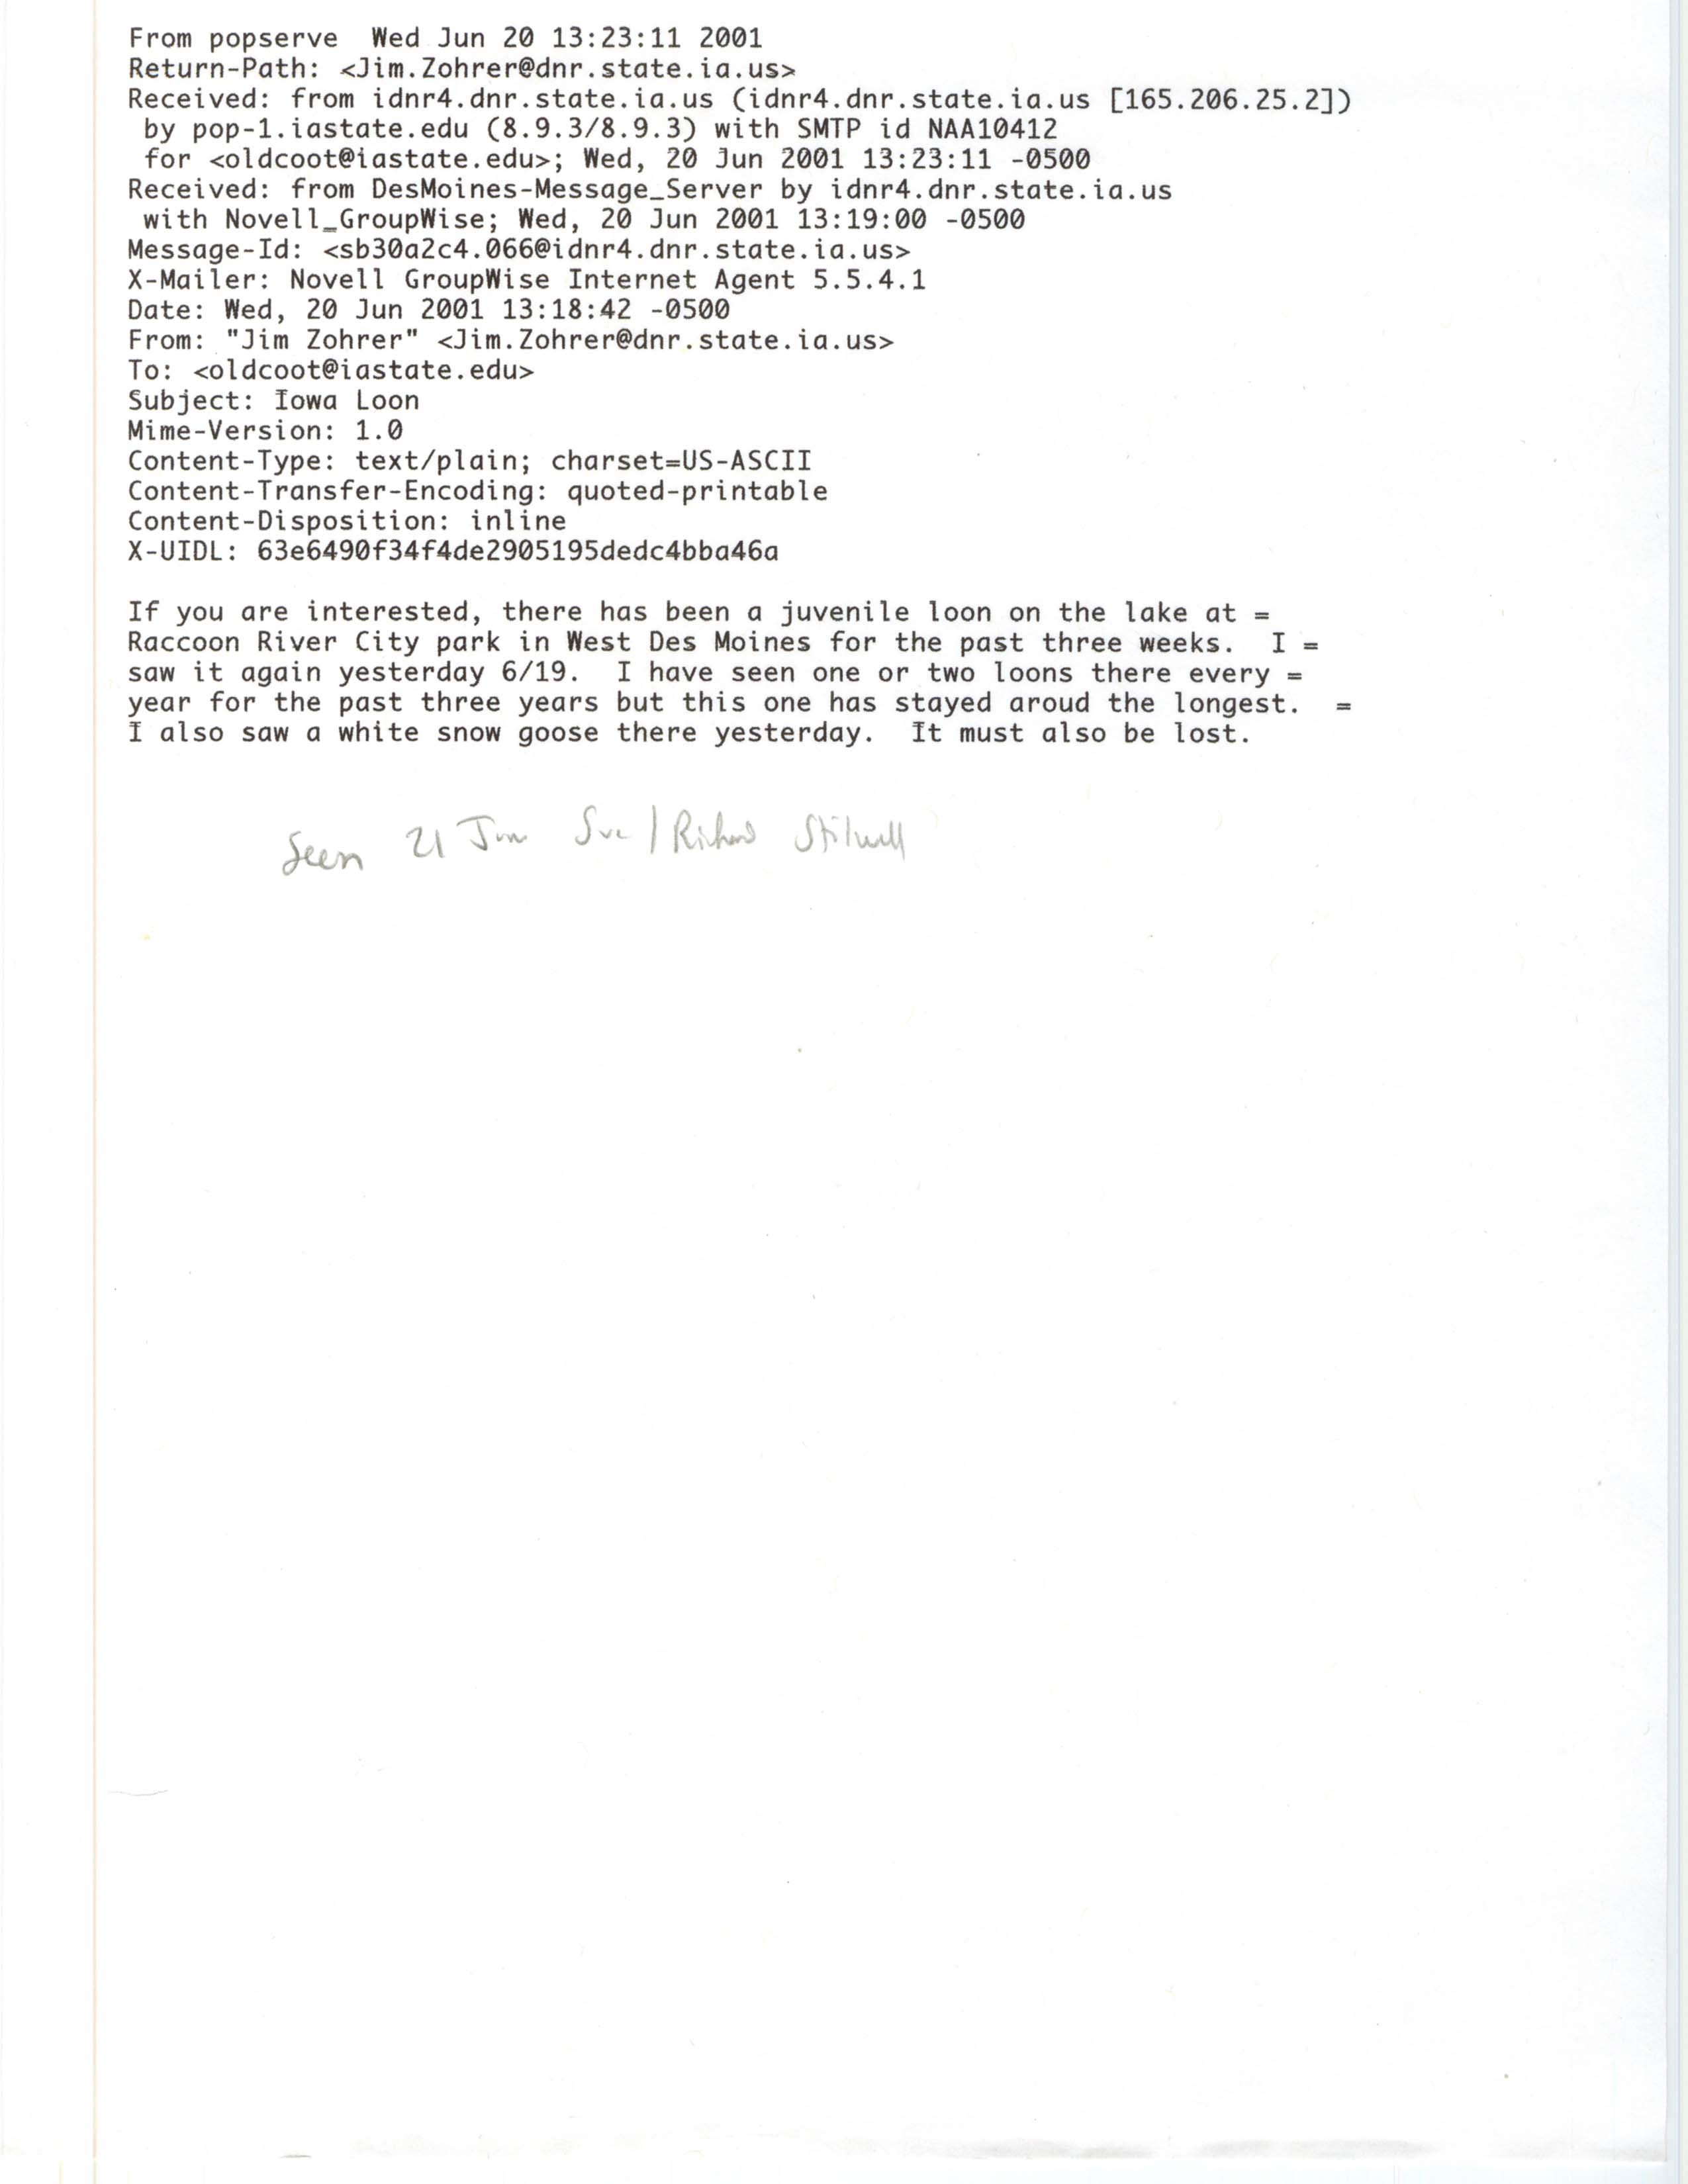 James J. Zohrer email to James J. Dinsmore regarding a juvenile Loon sighting, June 20, 2001